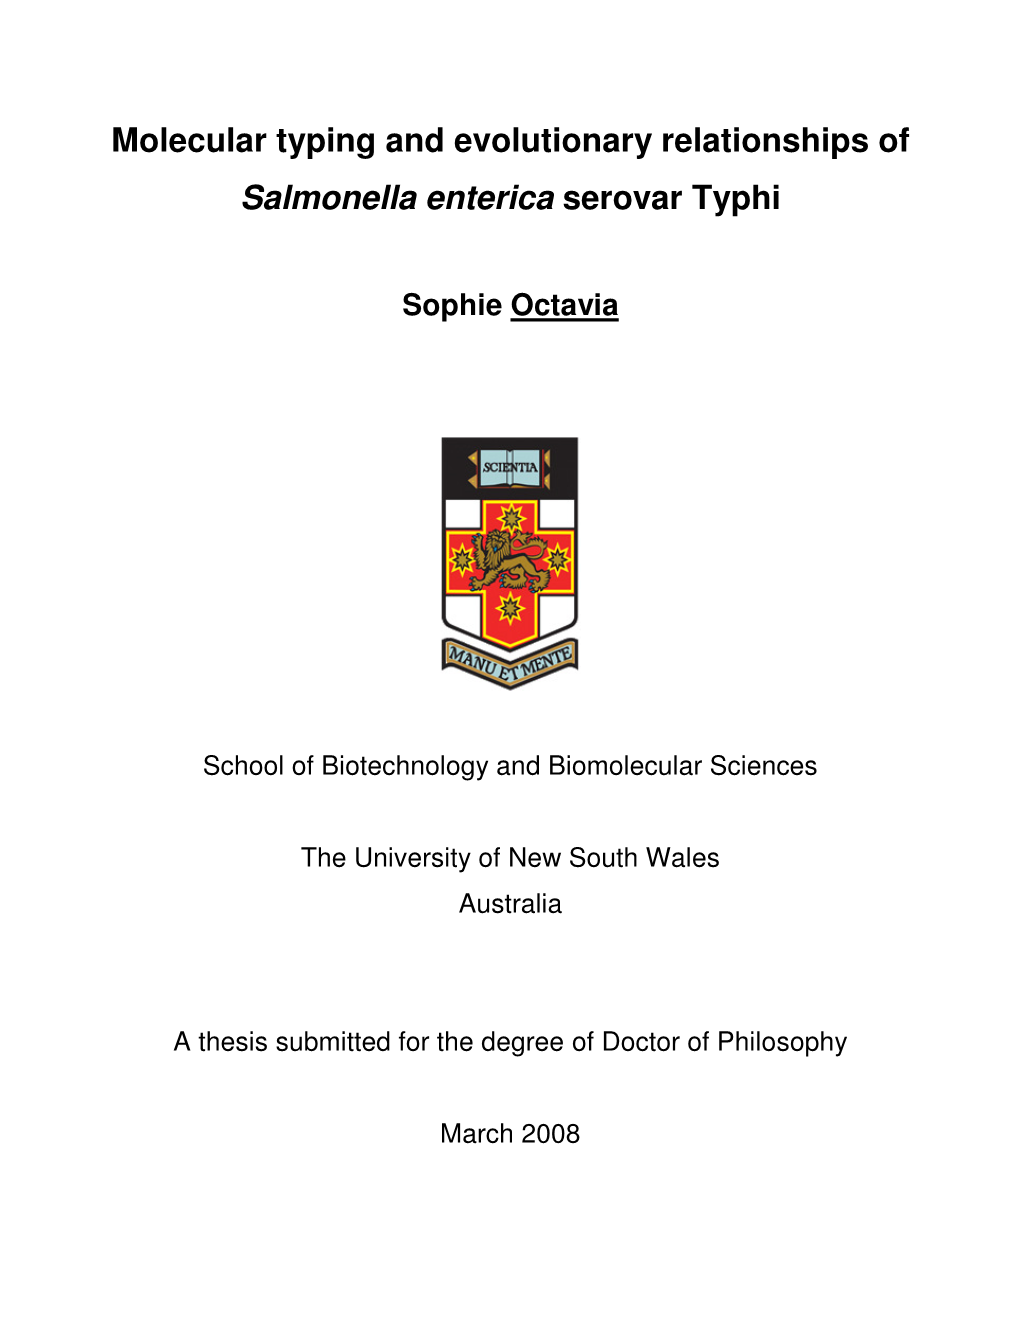 Molecular Typing and Evolutionary Relationships of Salmonella Enterica Serovar Typhi